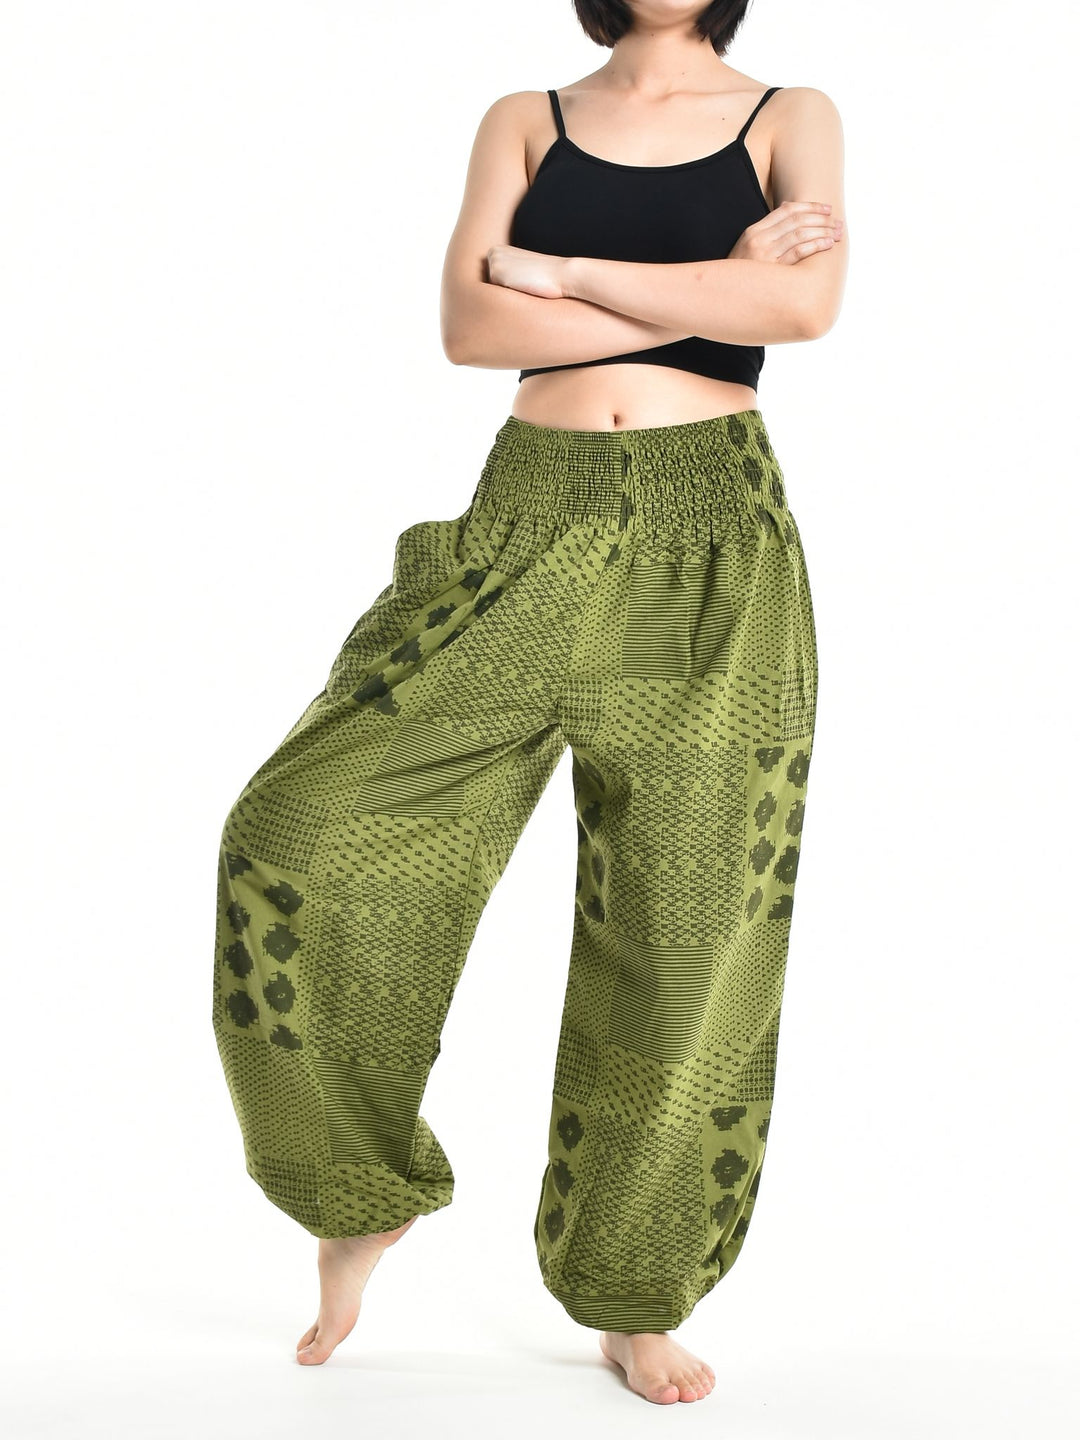 Bohotusk Womens Autumn Green Lunar Cotton Harem Pants S/M to 3XL